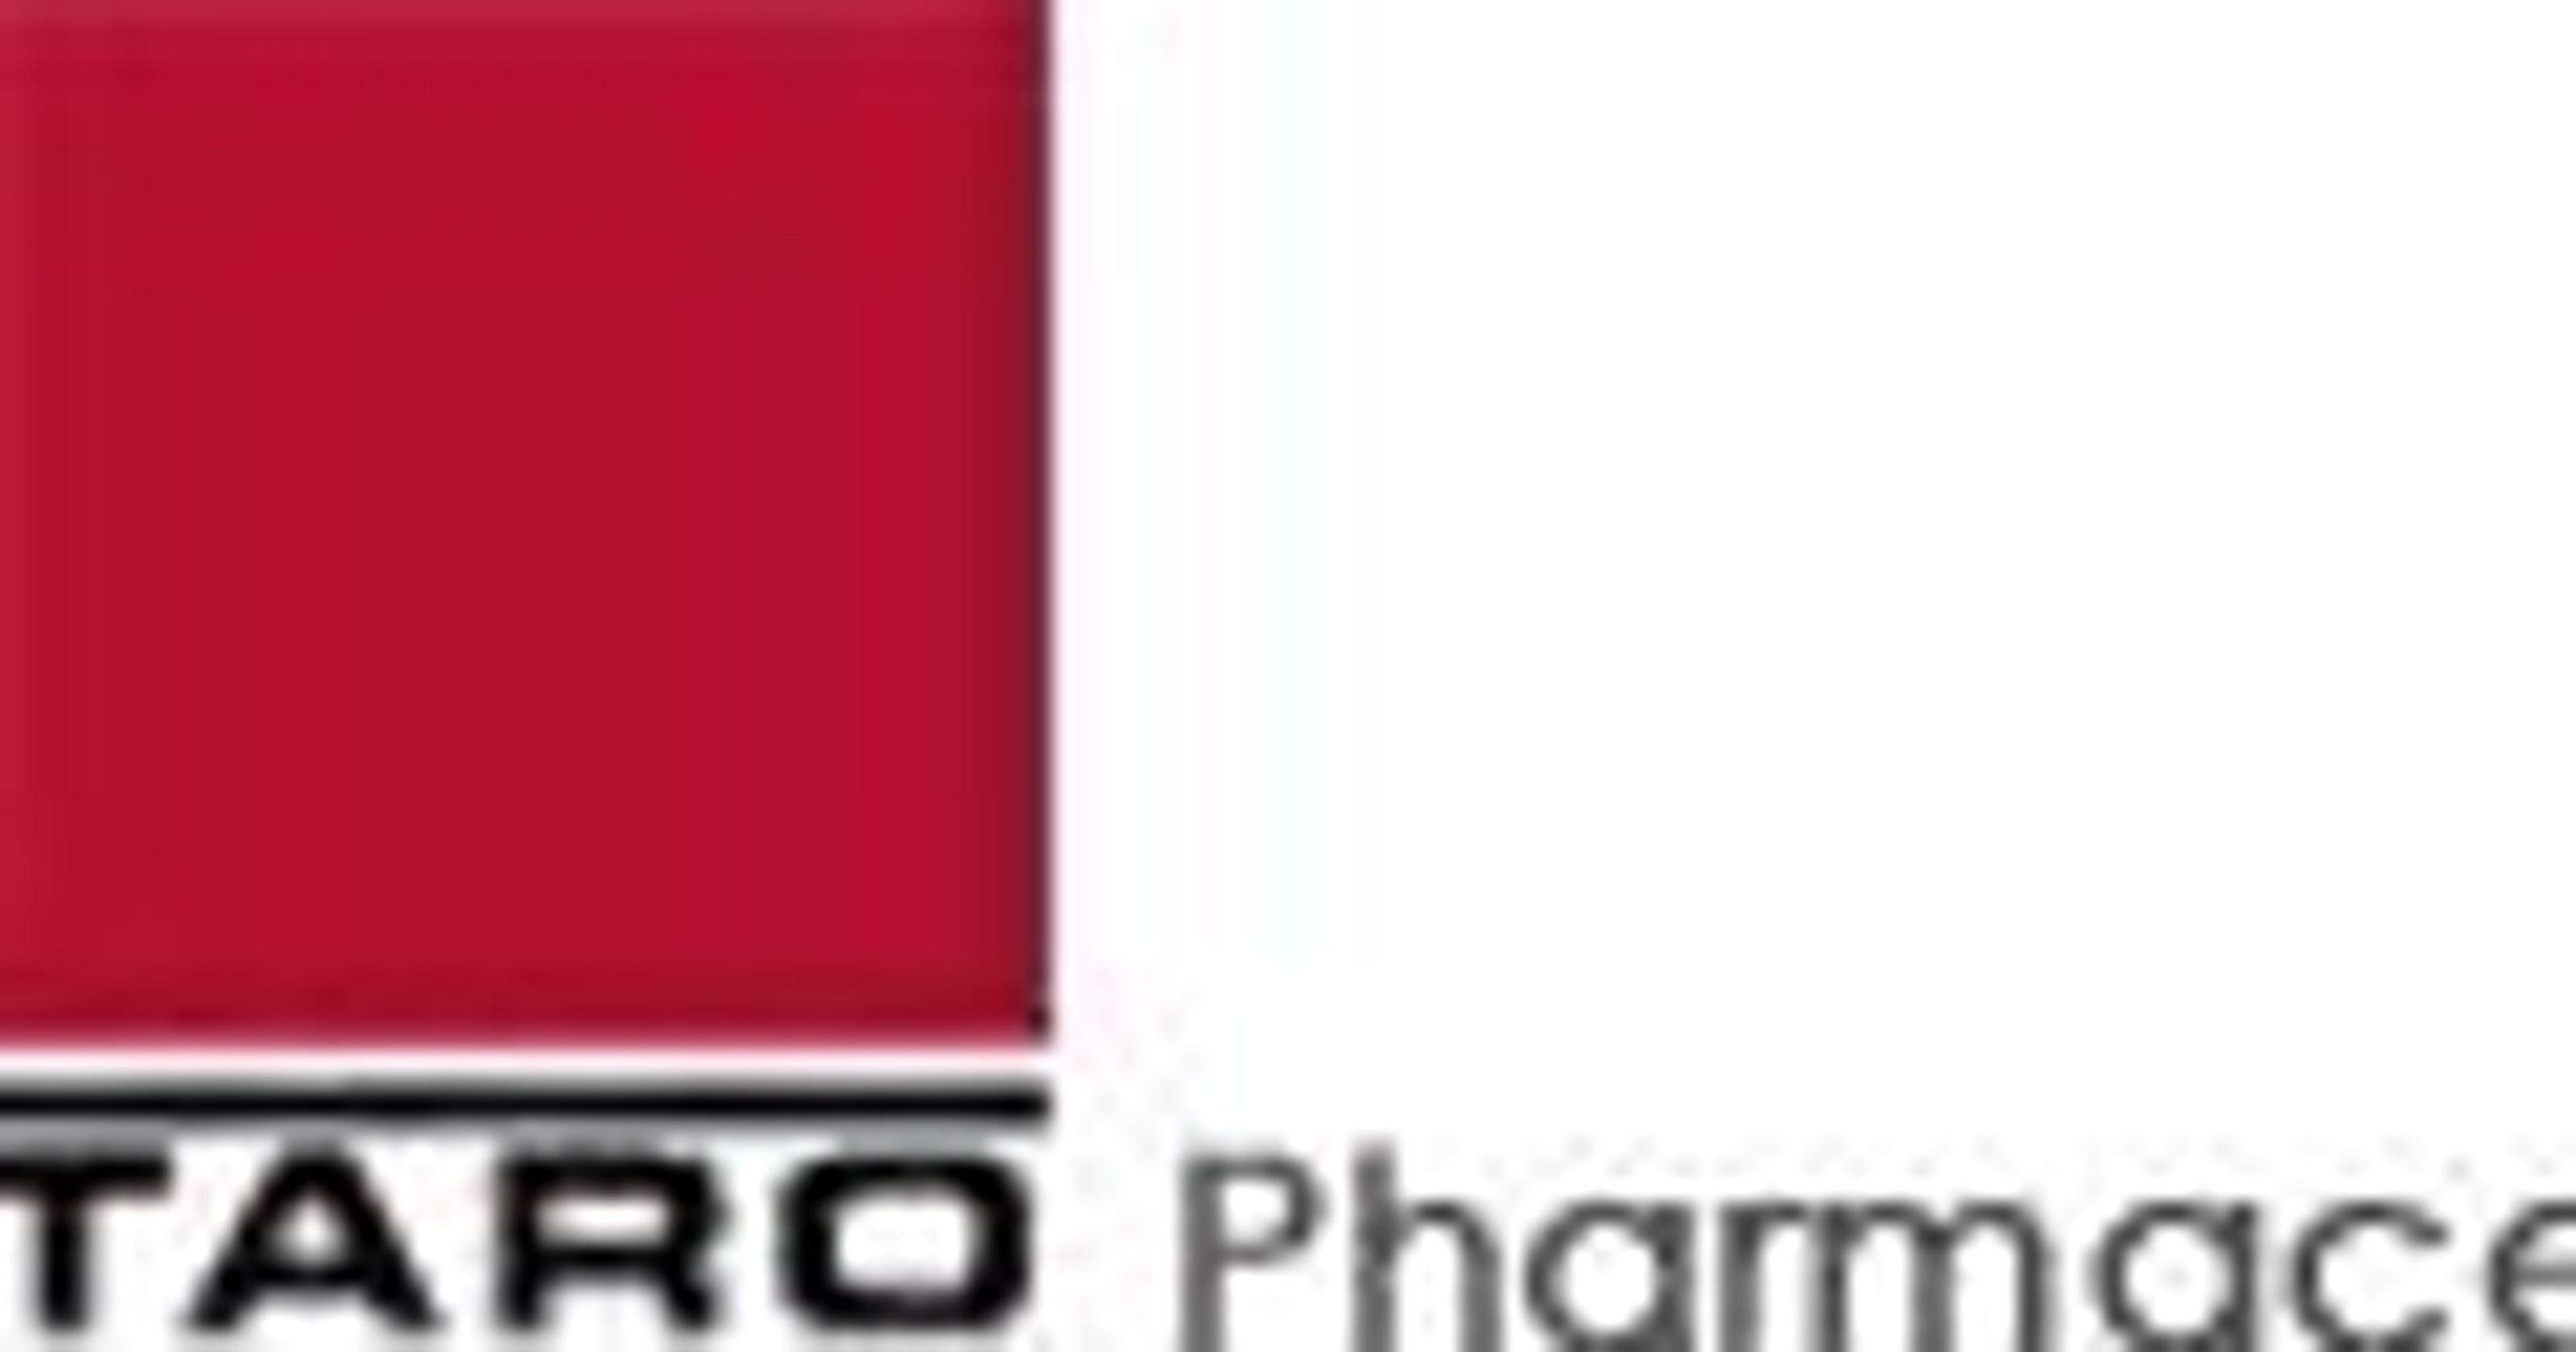 TaroPharma Logo - DOJ subpoenas Taro Pharmaceuticals over generics